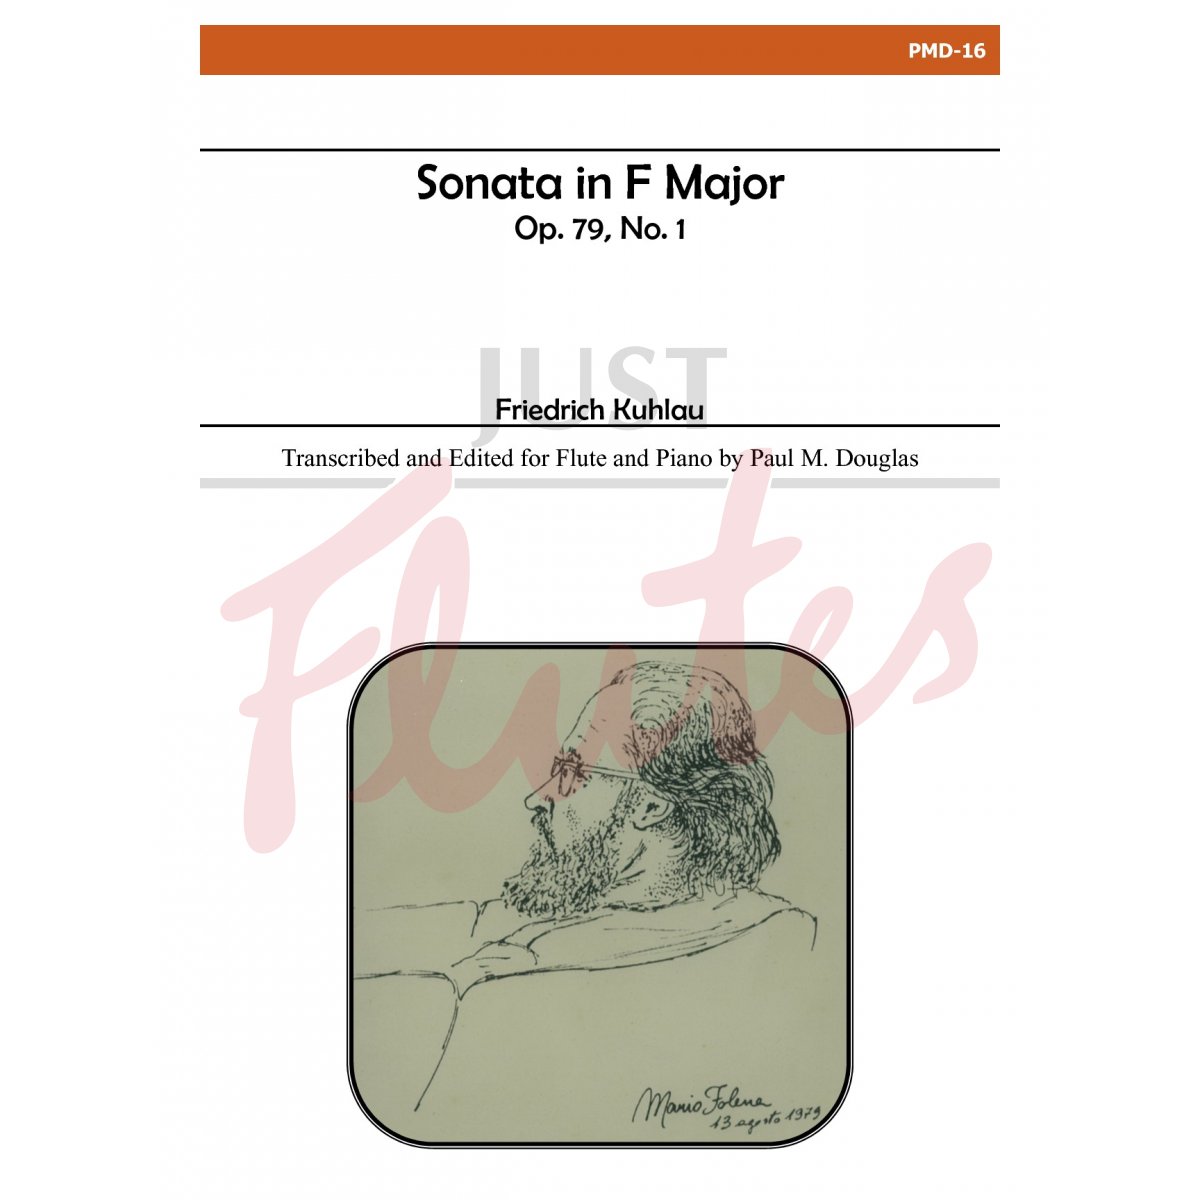 Three Sonatas, Vol. I: Sonata in F Major